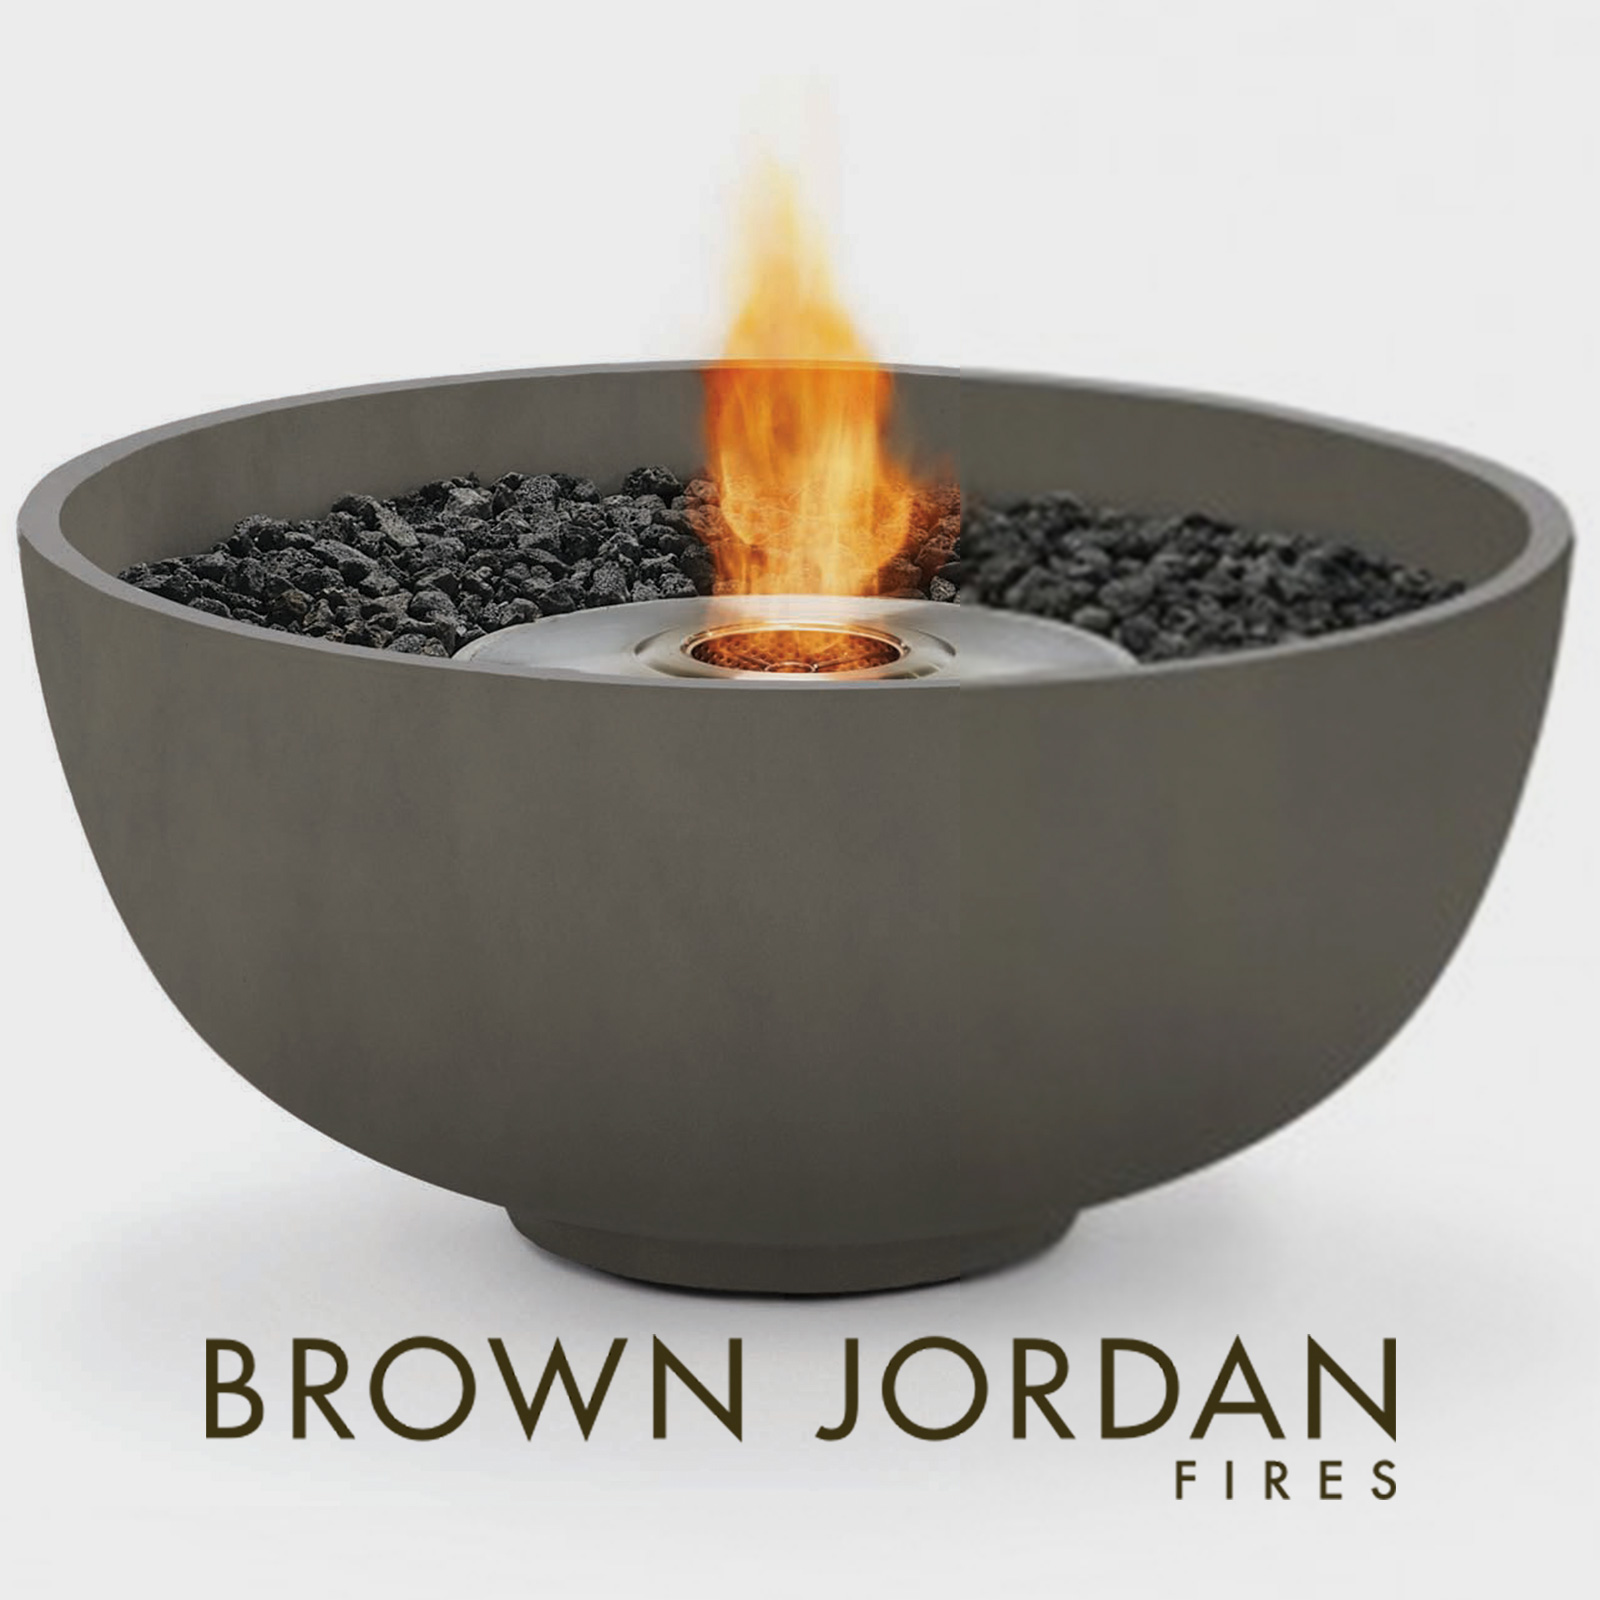 Brown Jordan Urth Fire Pits, Brown Jordan Fire Pit